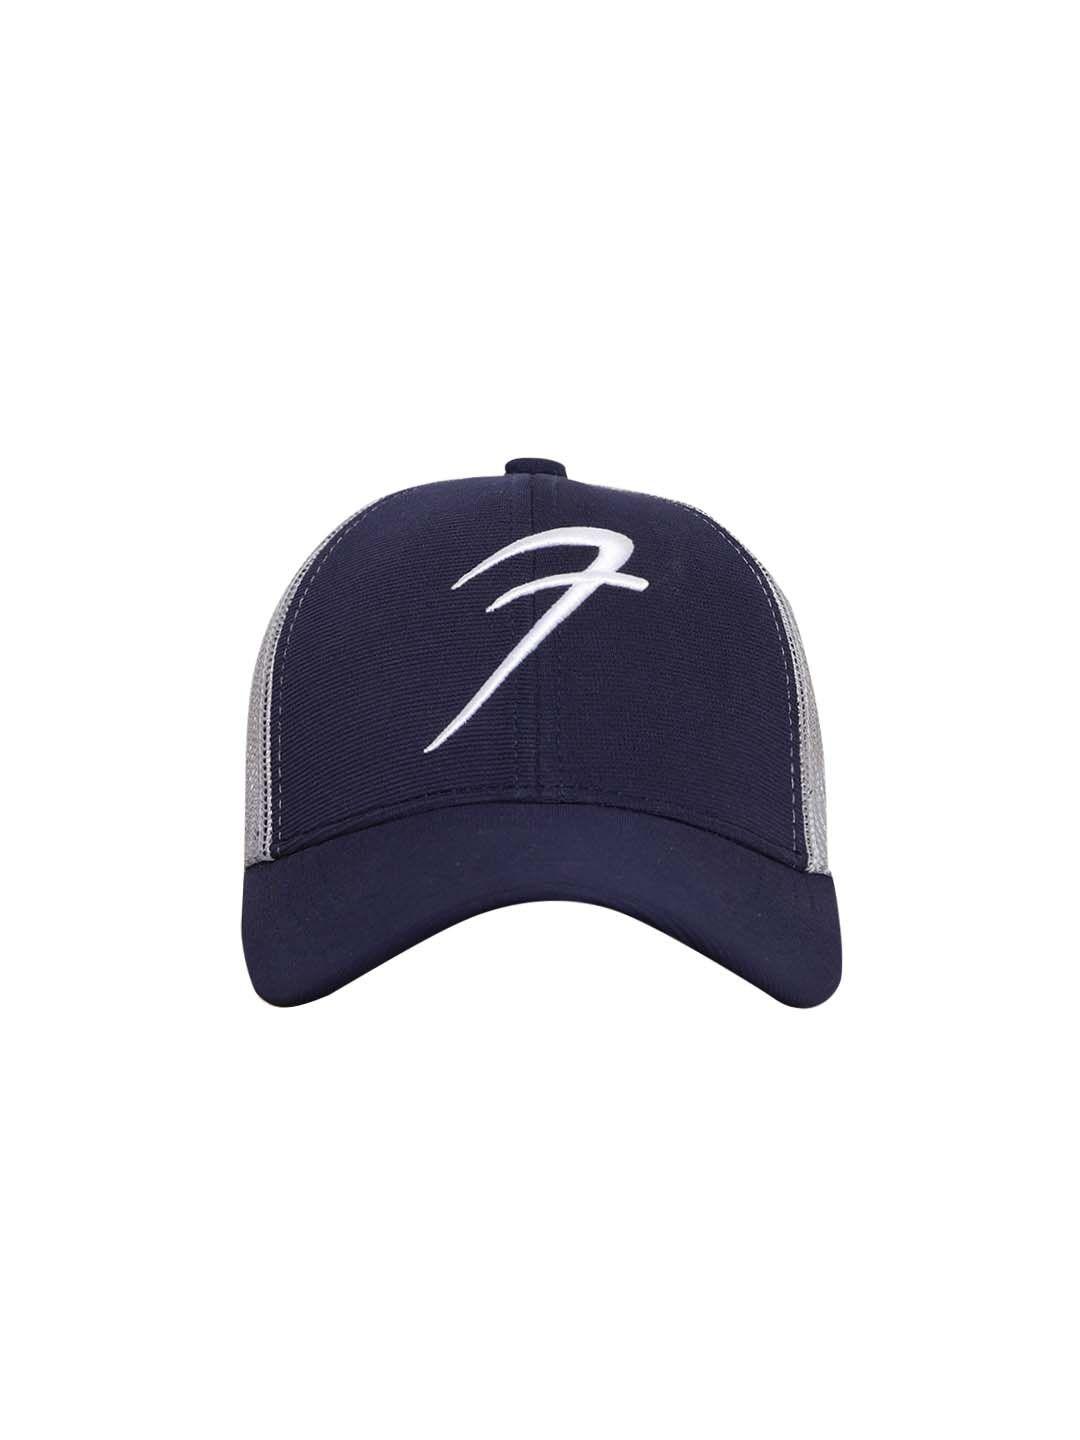 fuaark unisex navy blue & grey colourblocked baseball cap